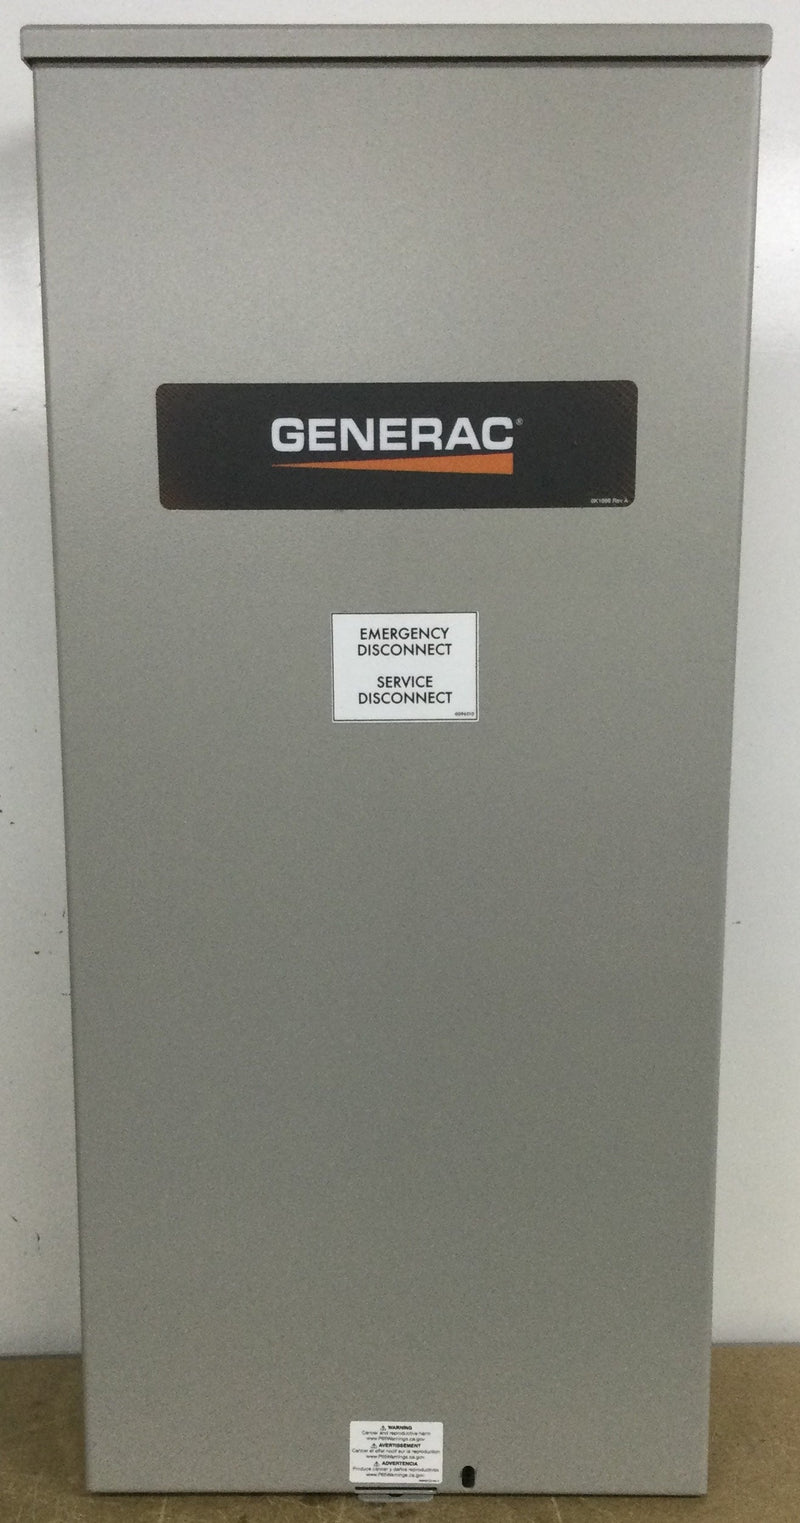 Generac RXSW200A3 Automatic Transfer Switch 200 Amp 240 VAC